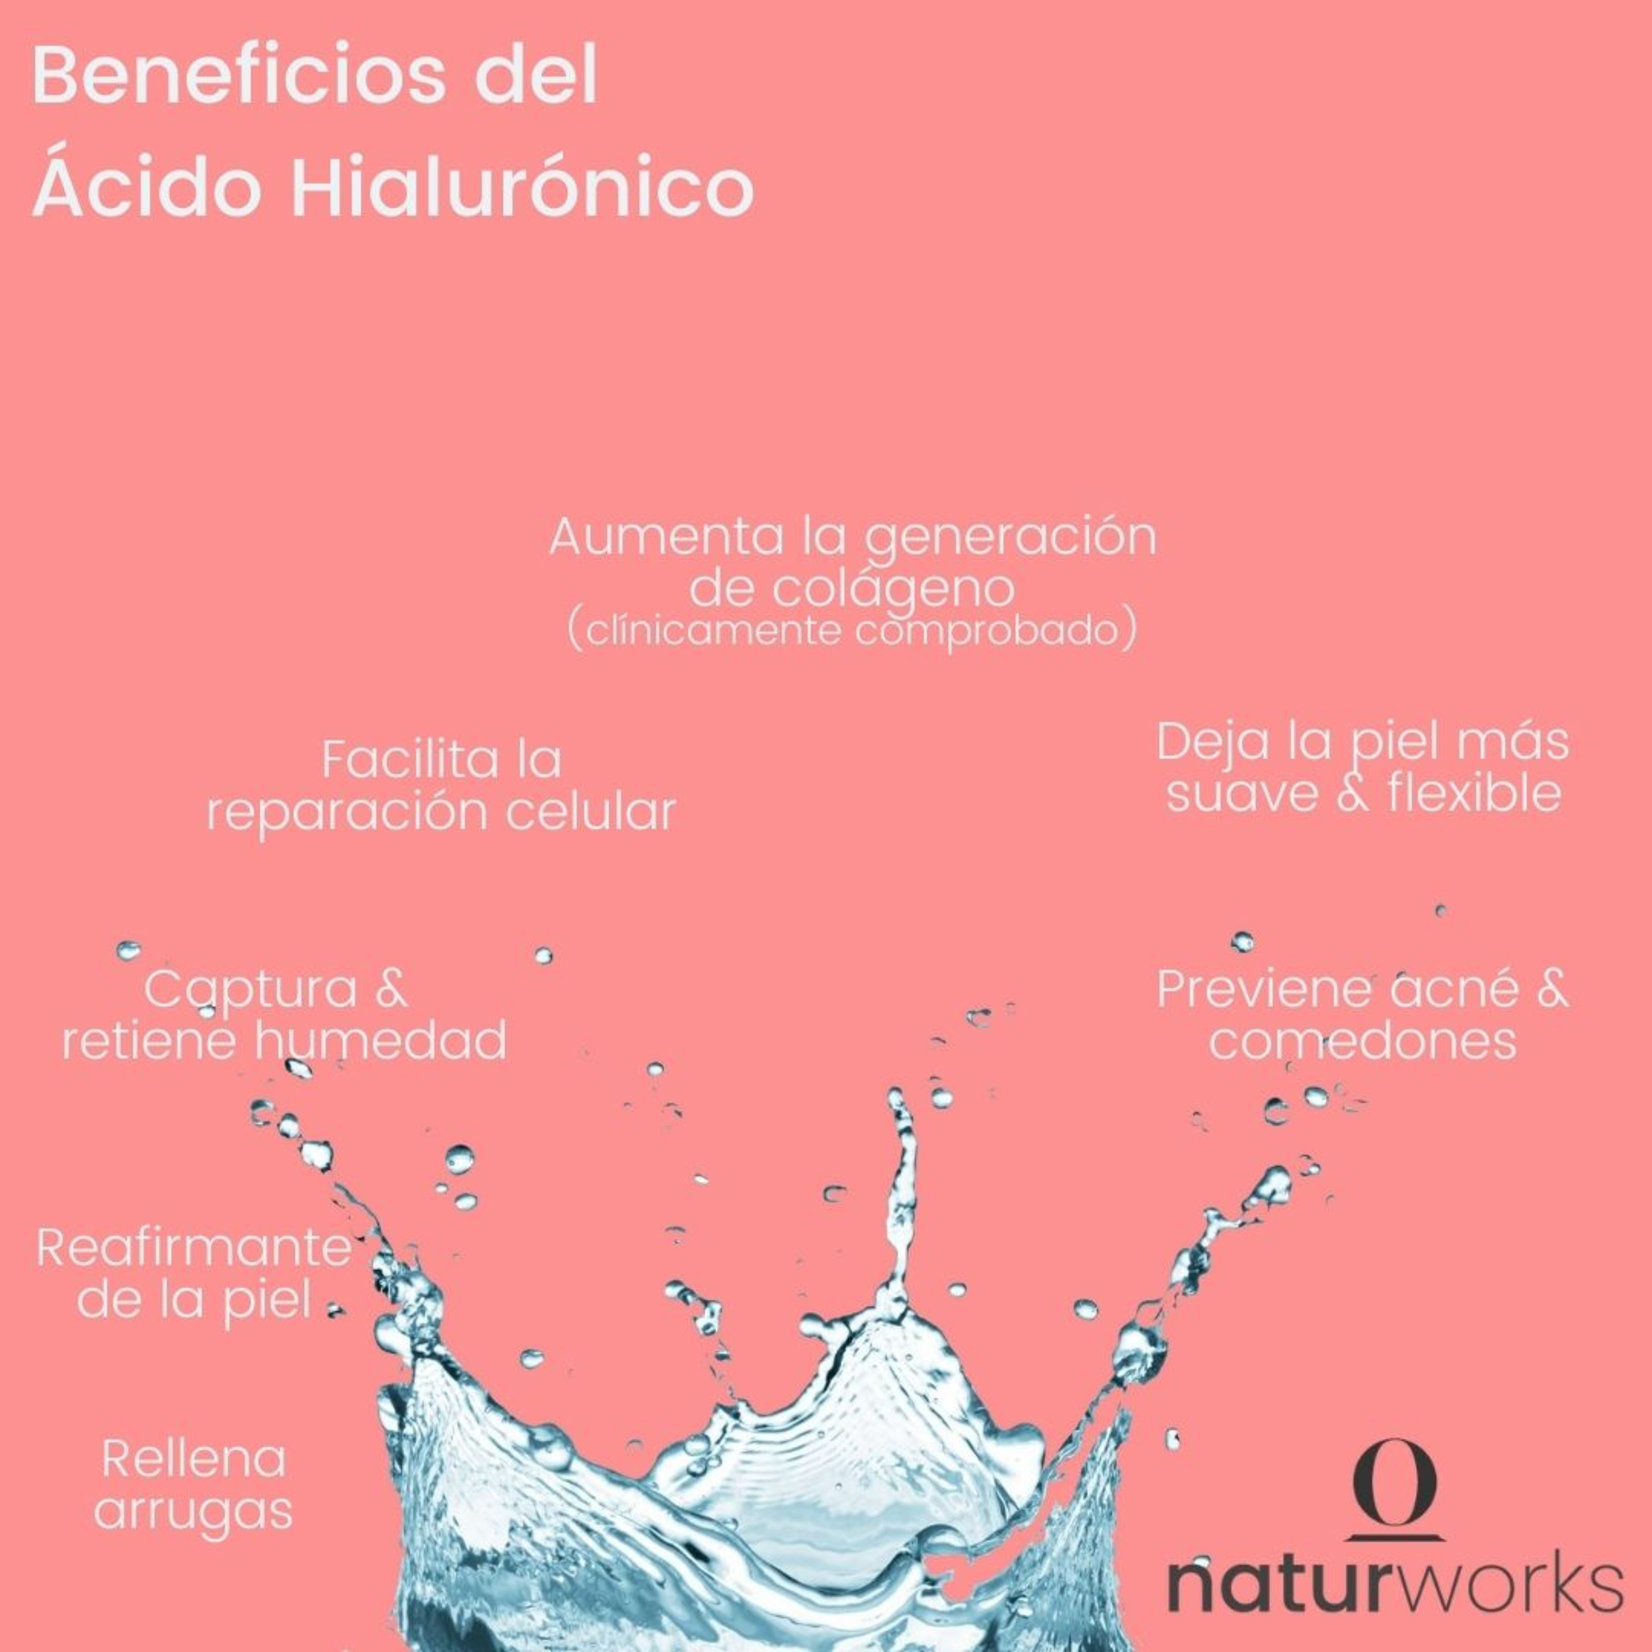 Naturworks Shampoo solido Naturworks Bomba hidratante acido hialuronico, pro vitamina B5 y extracto frutal 100 gr